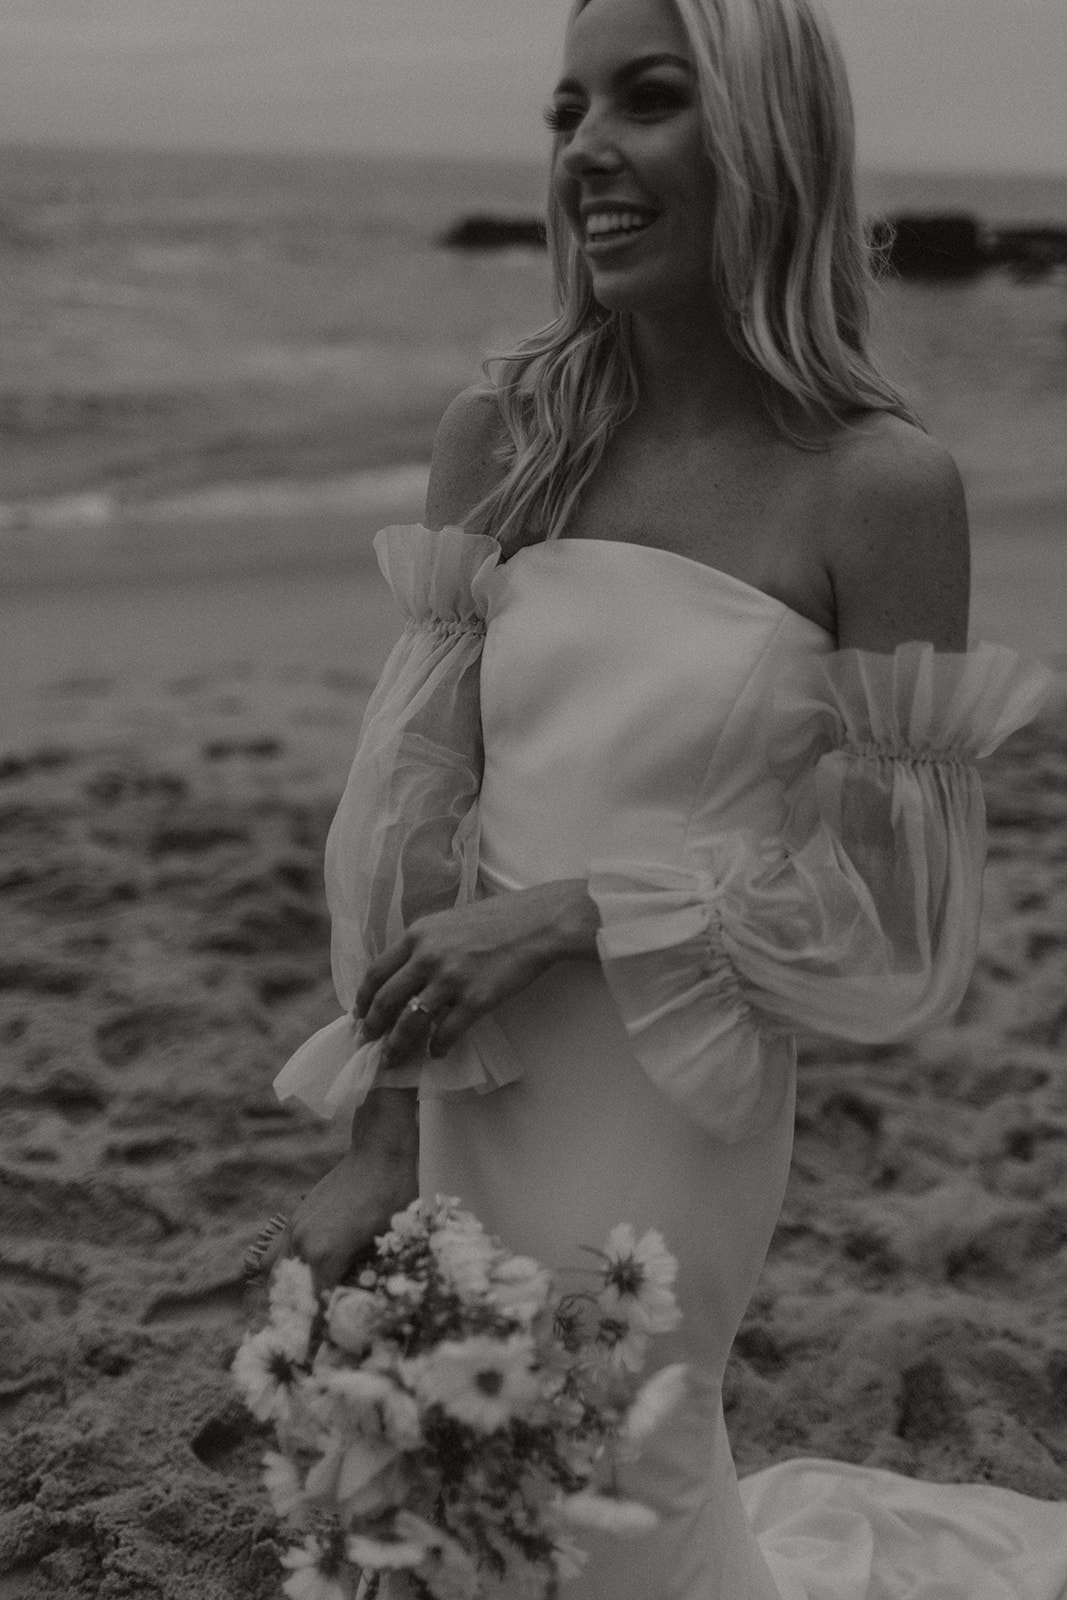 bride holding boho themed wedding flowers on beach